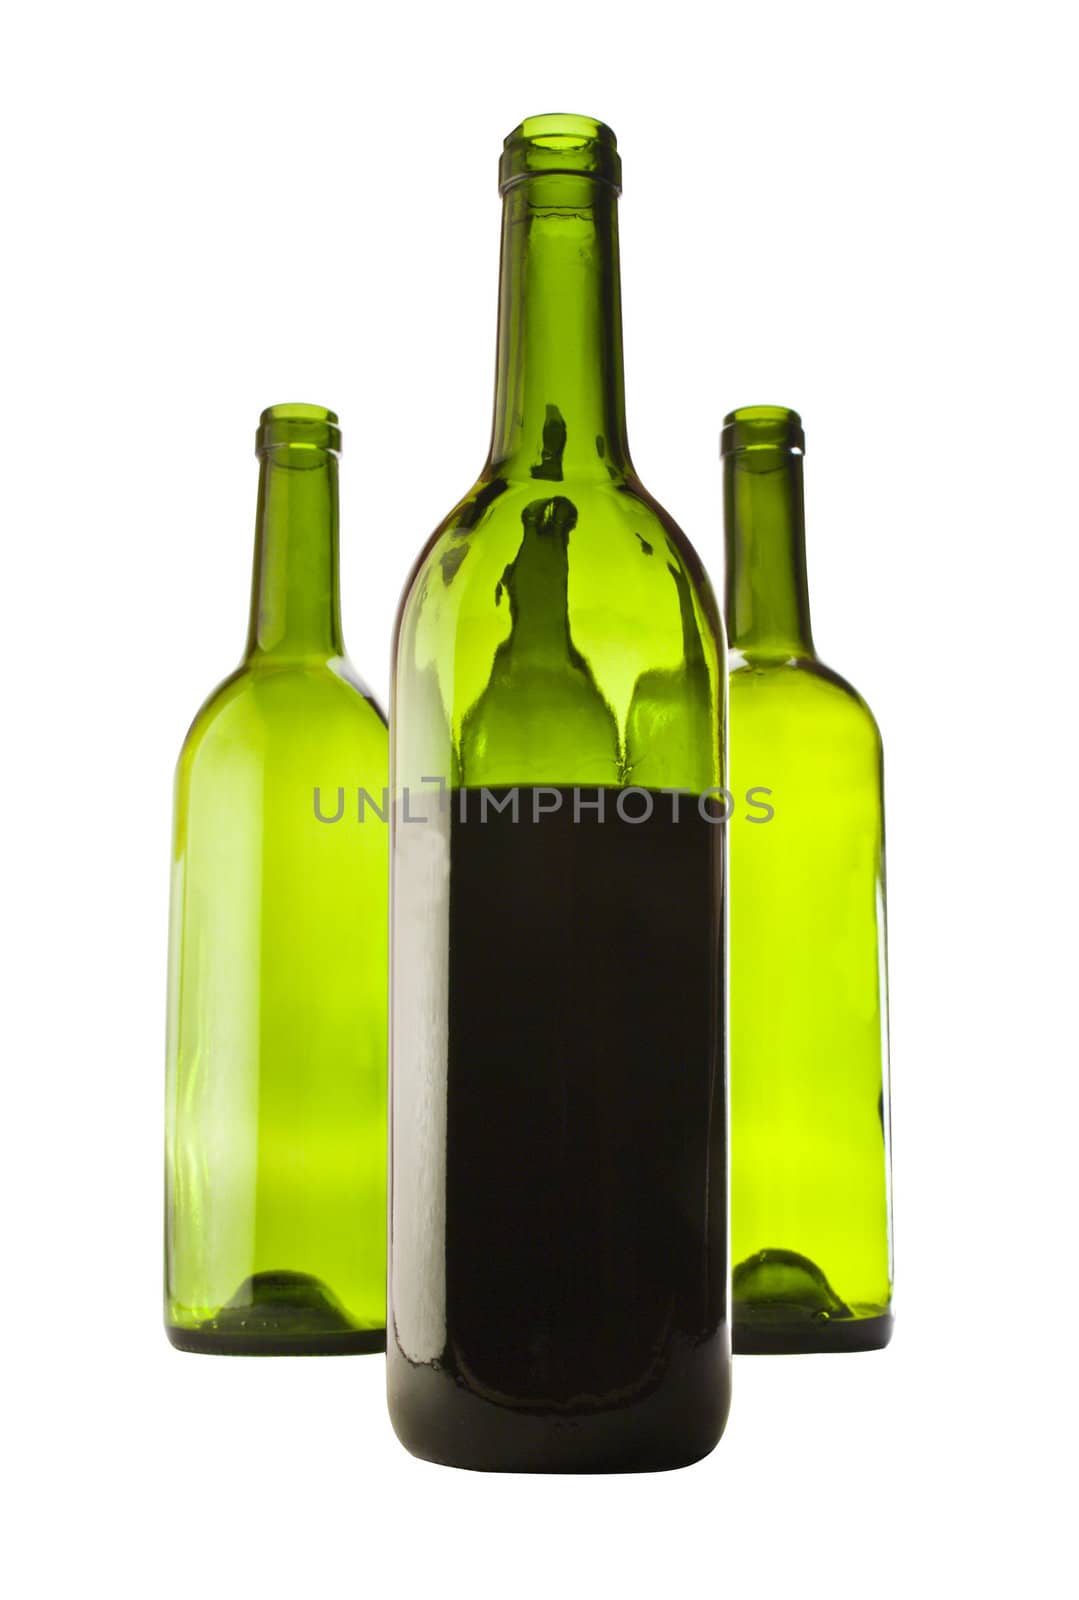 Wine bottles2 by smoki